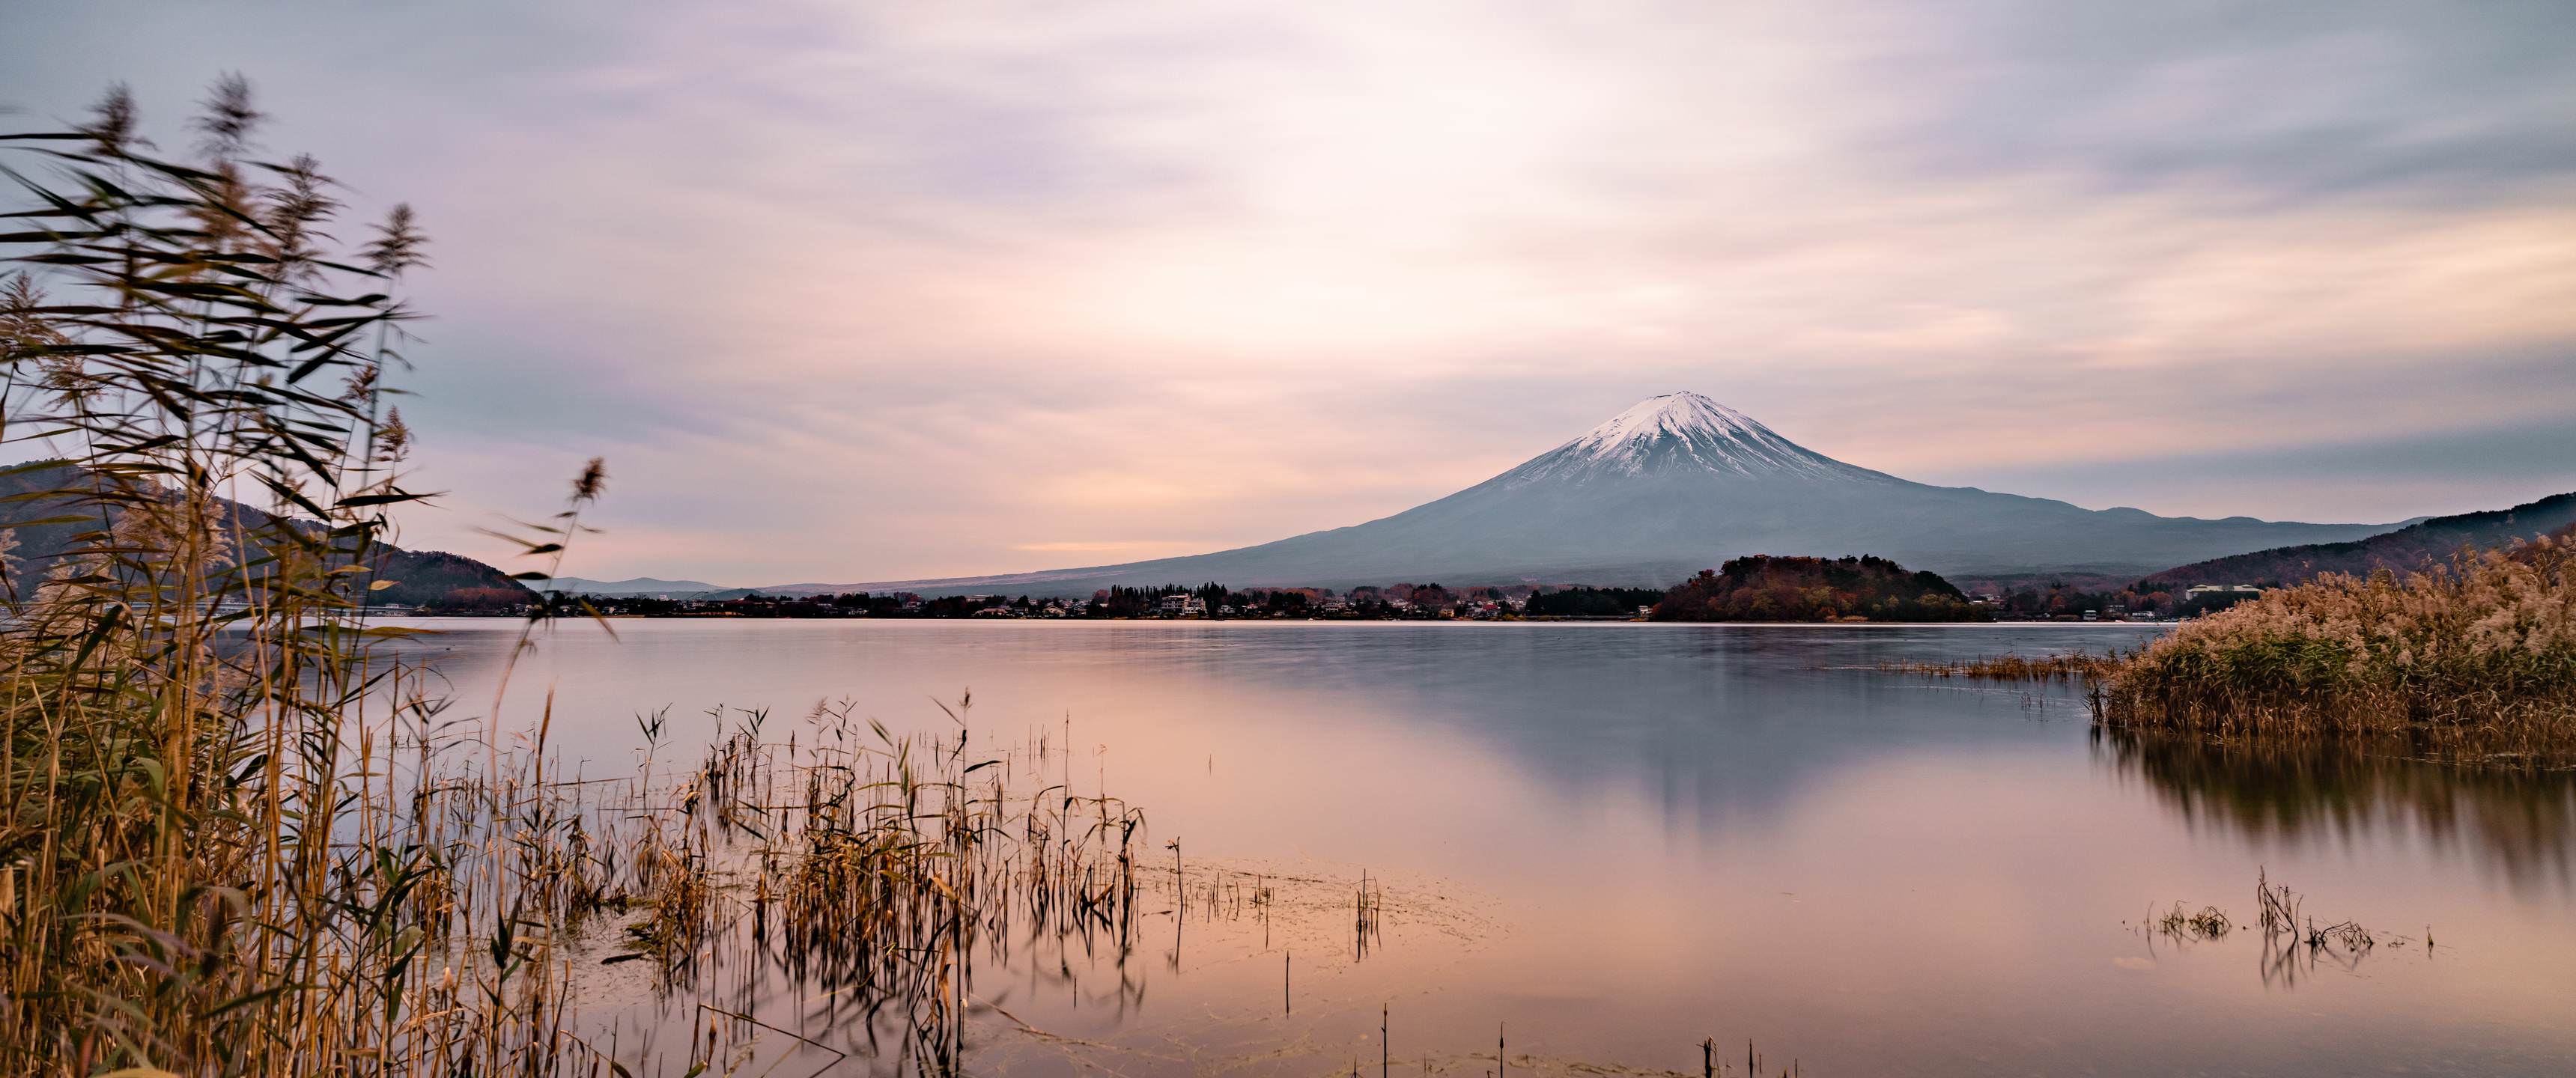 Mt. Fuji Tokyo, Japan [3440x1440]